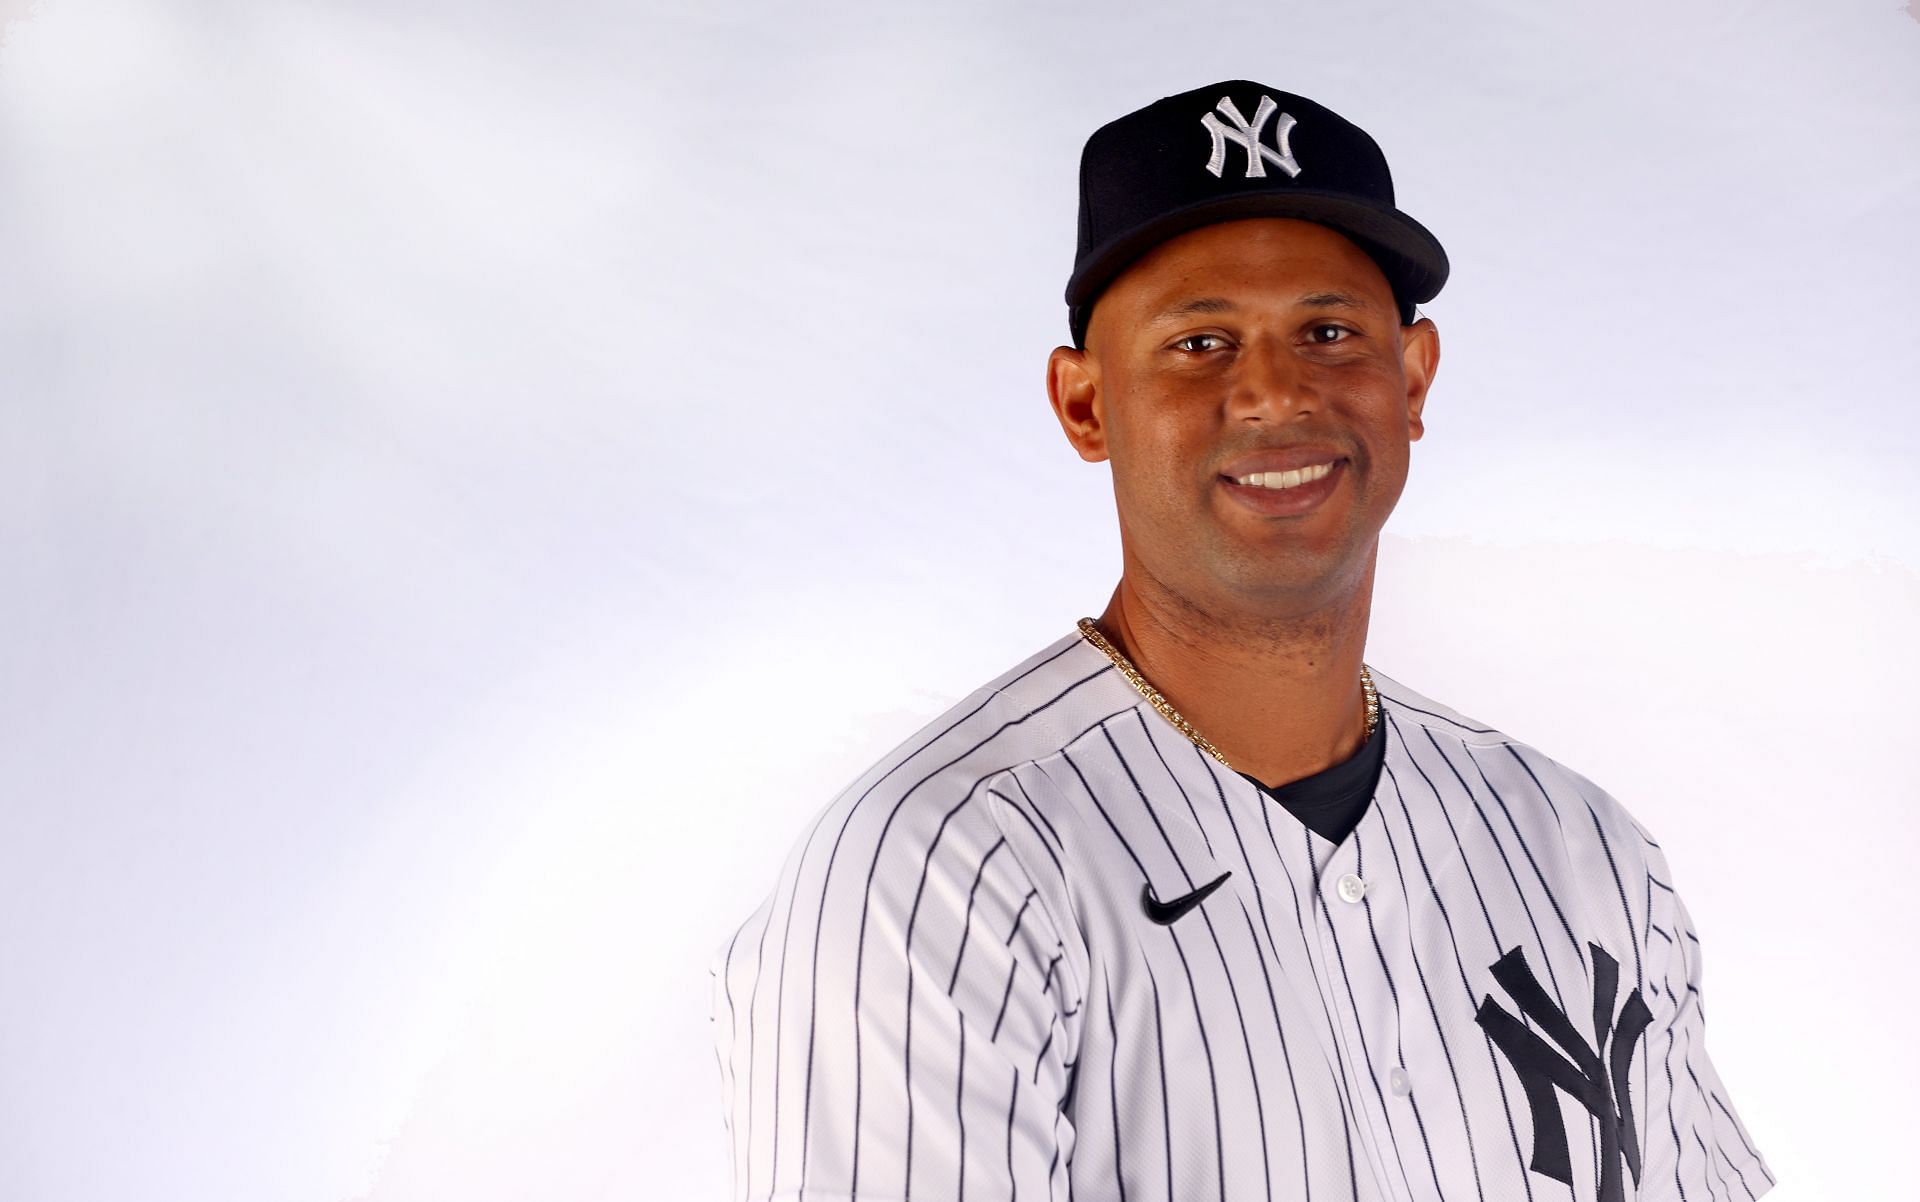 Aaron Hicks of the New York Yankees